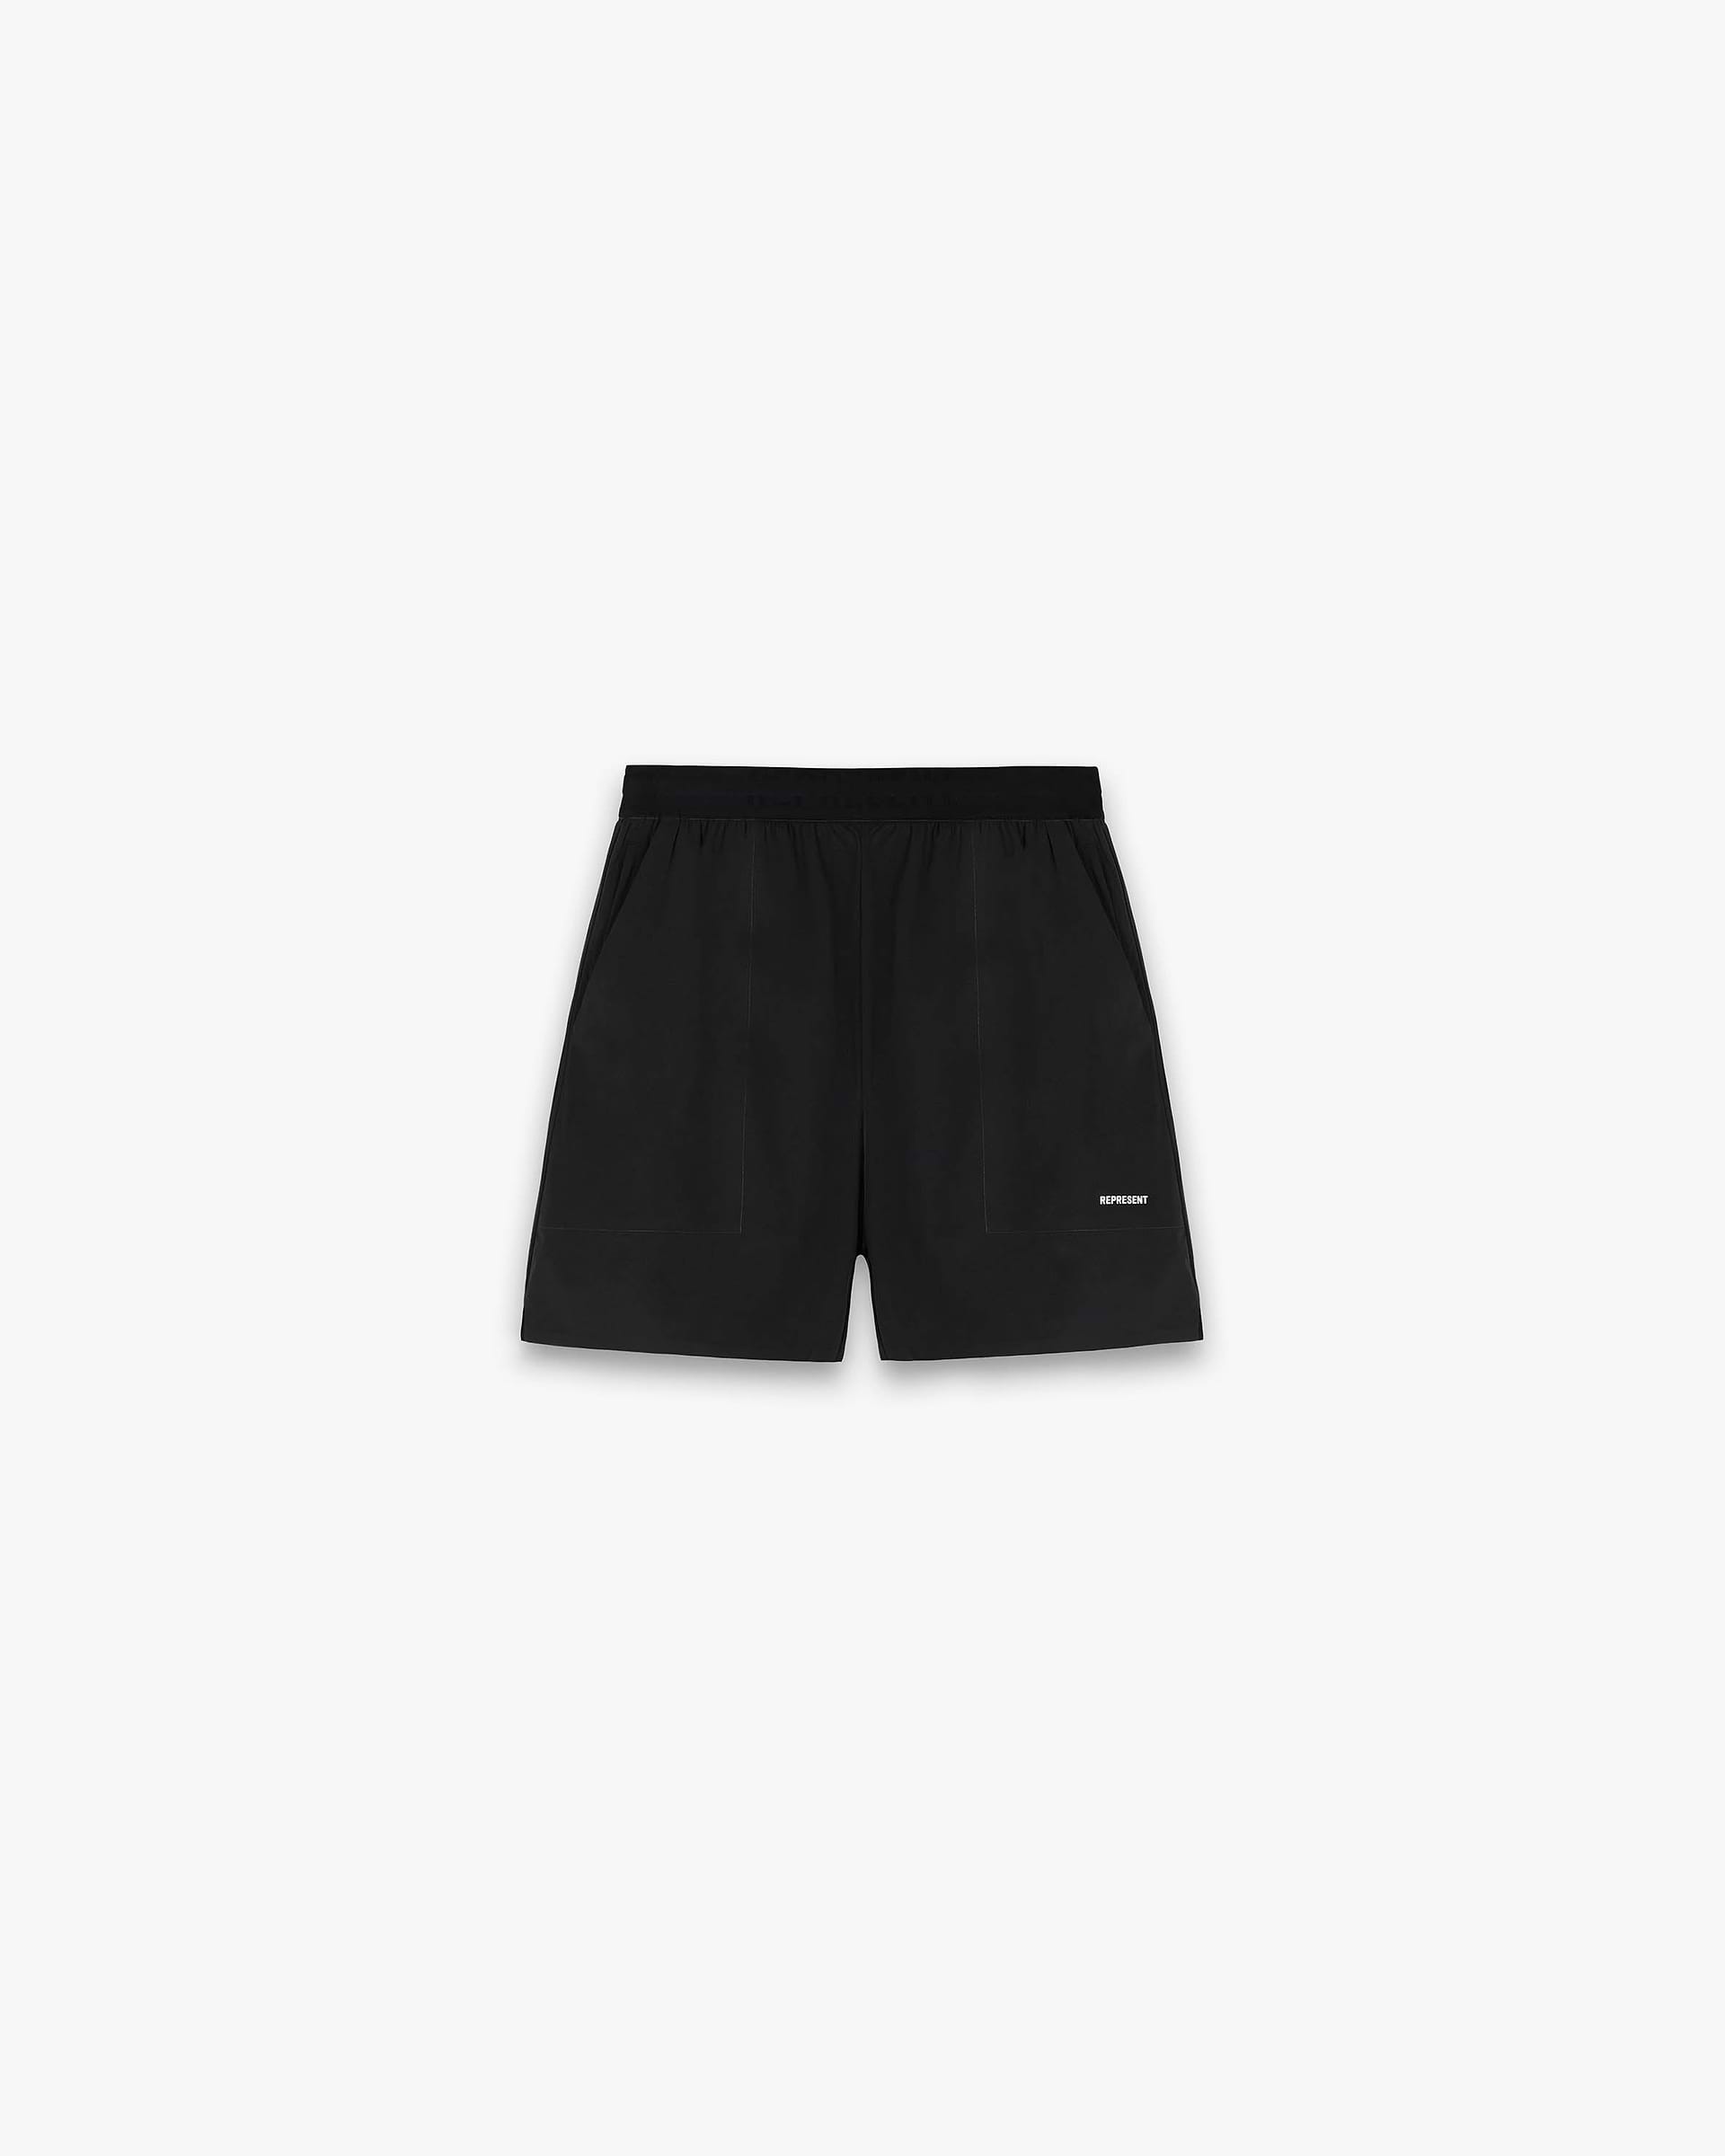 Team 247 Fused Shorts X WIT - Black